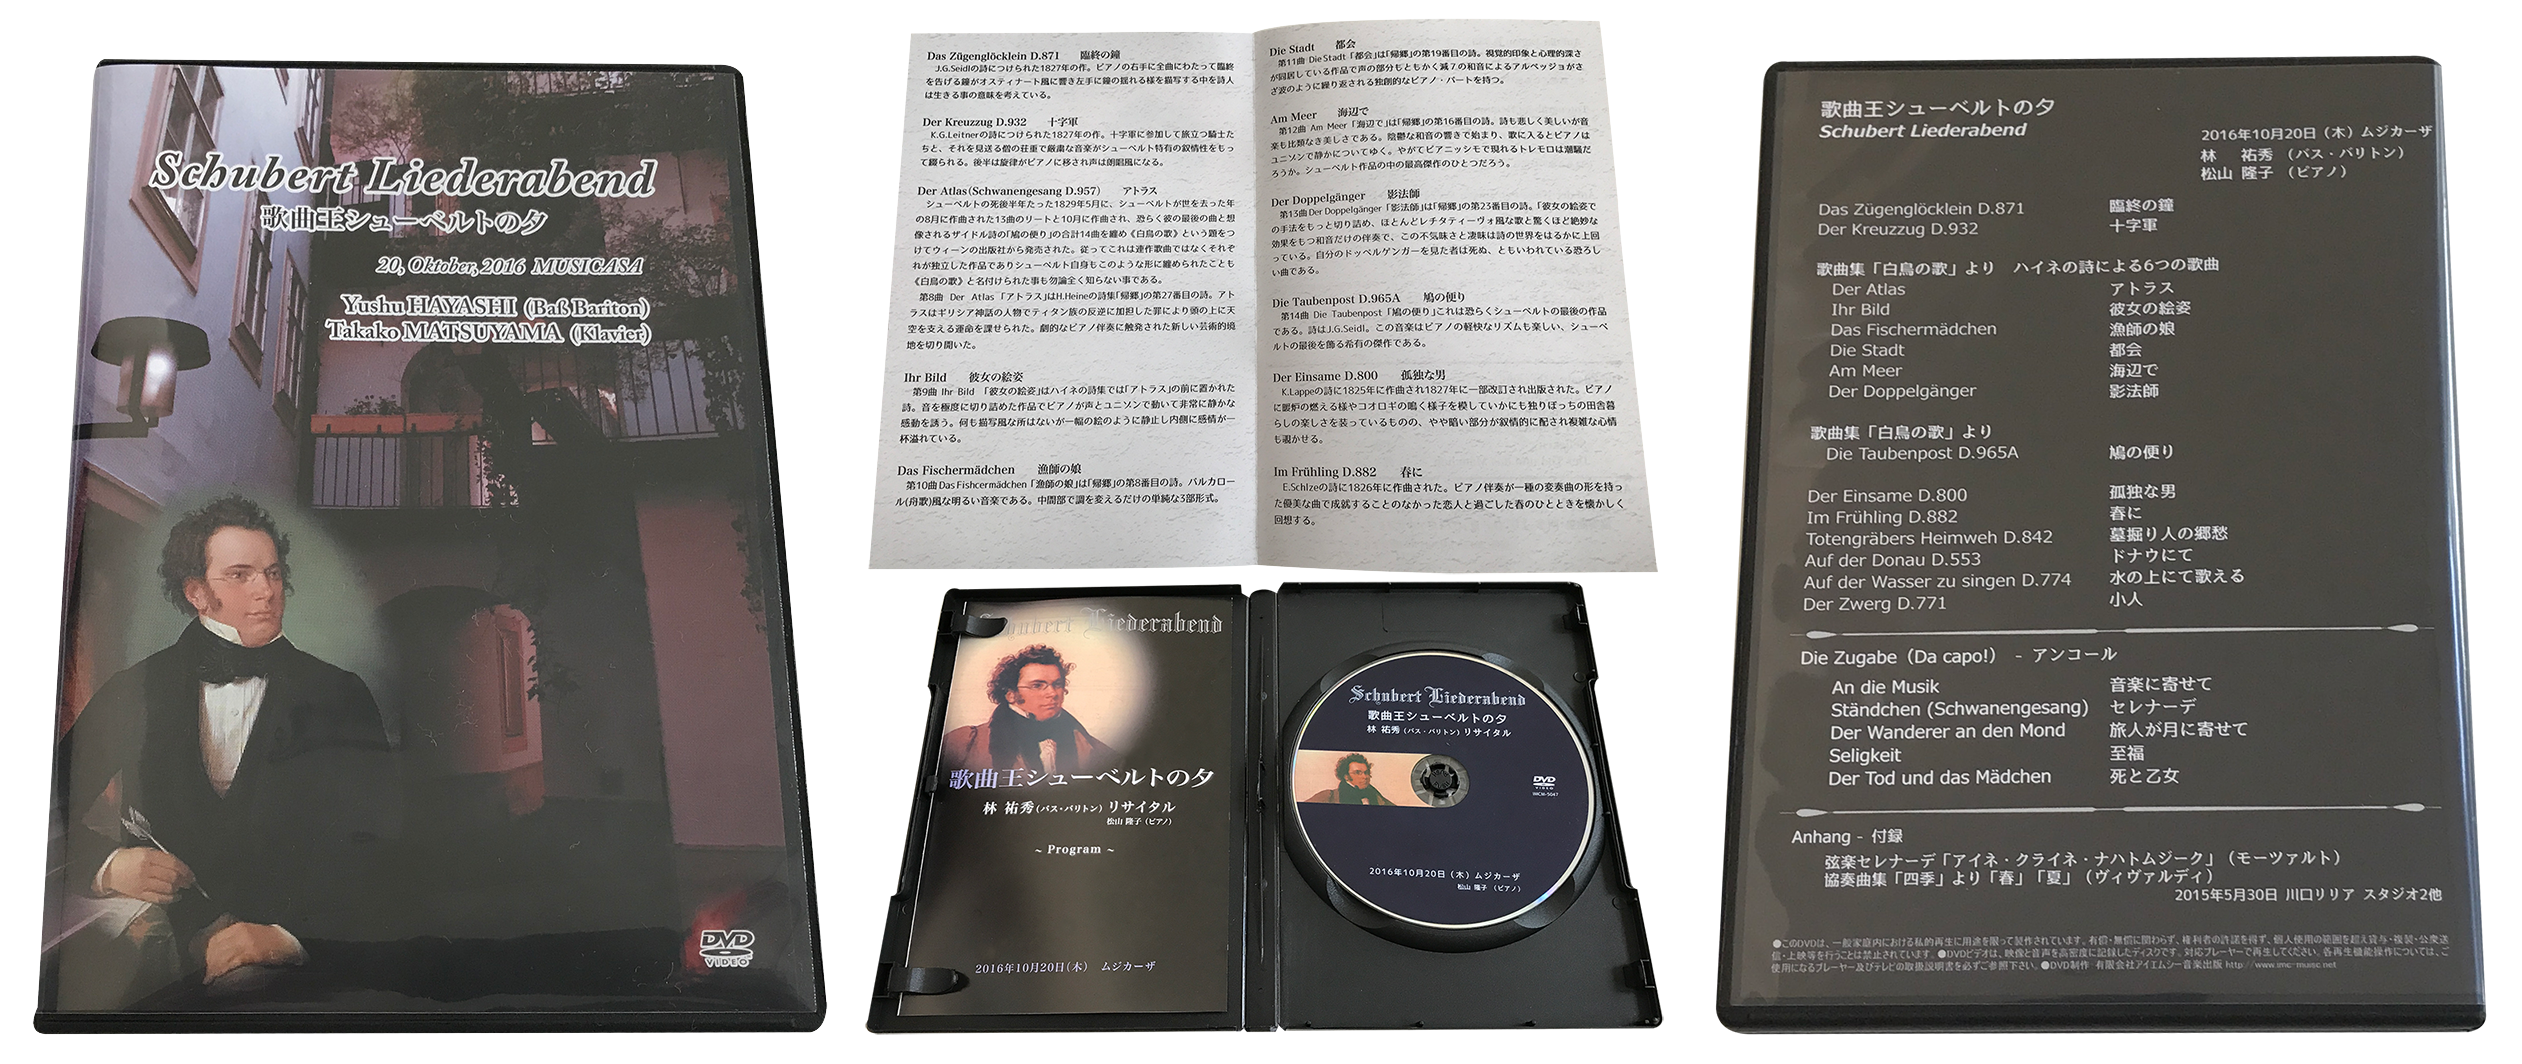 Schubert Liederabend 歌曲王シューベルトの夕　DVD